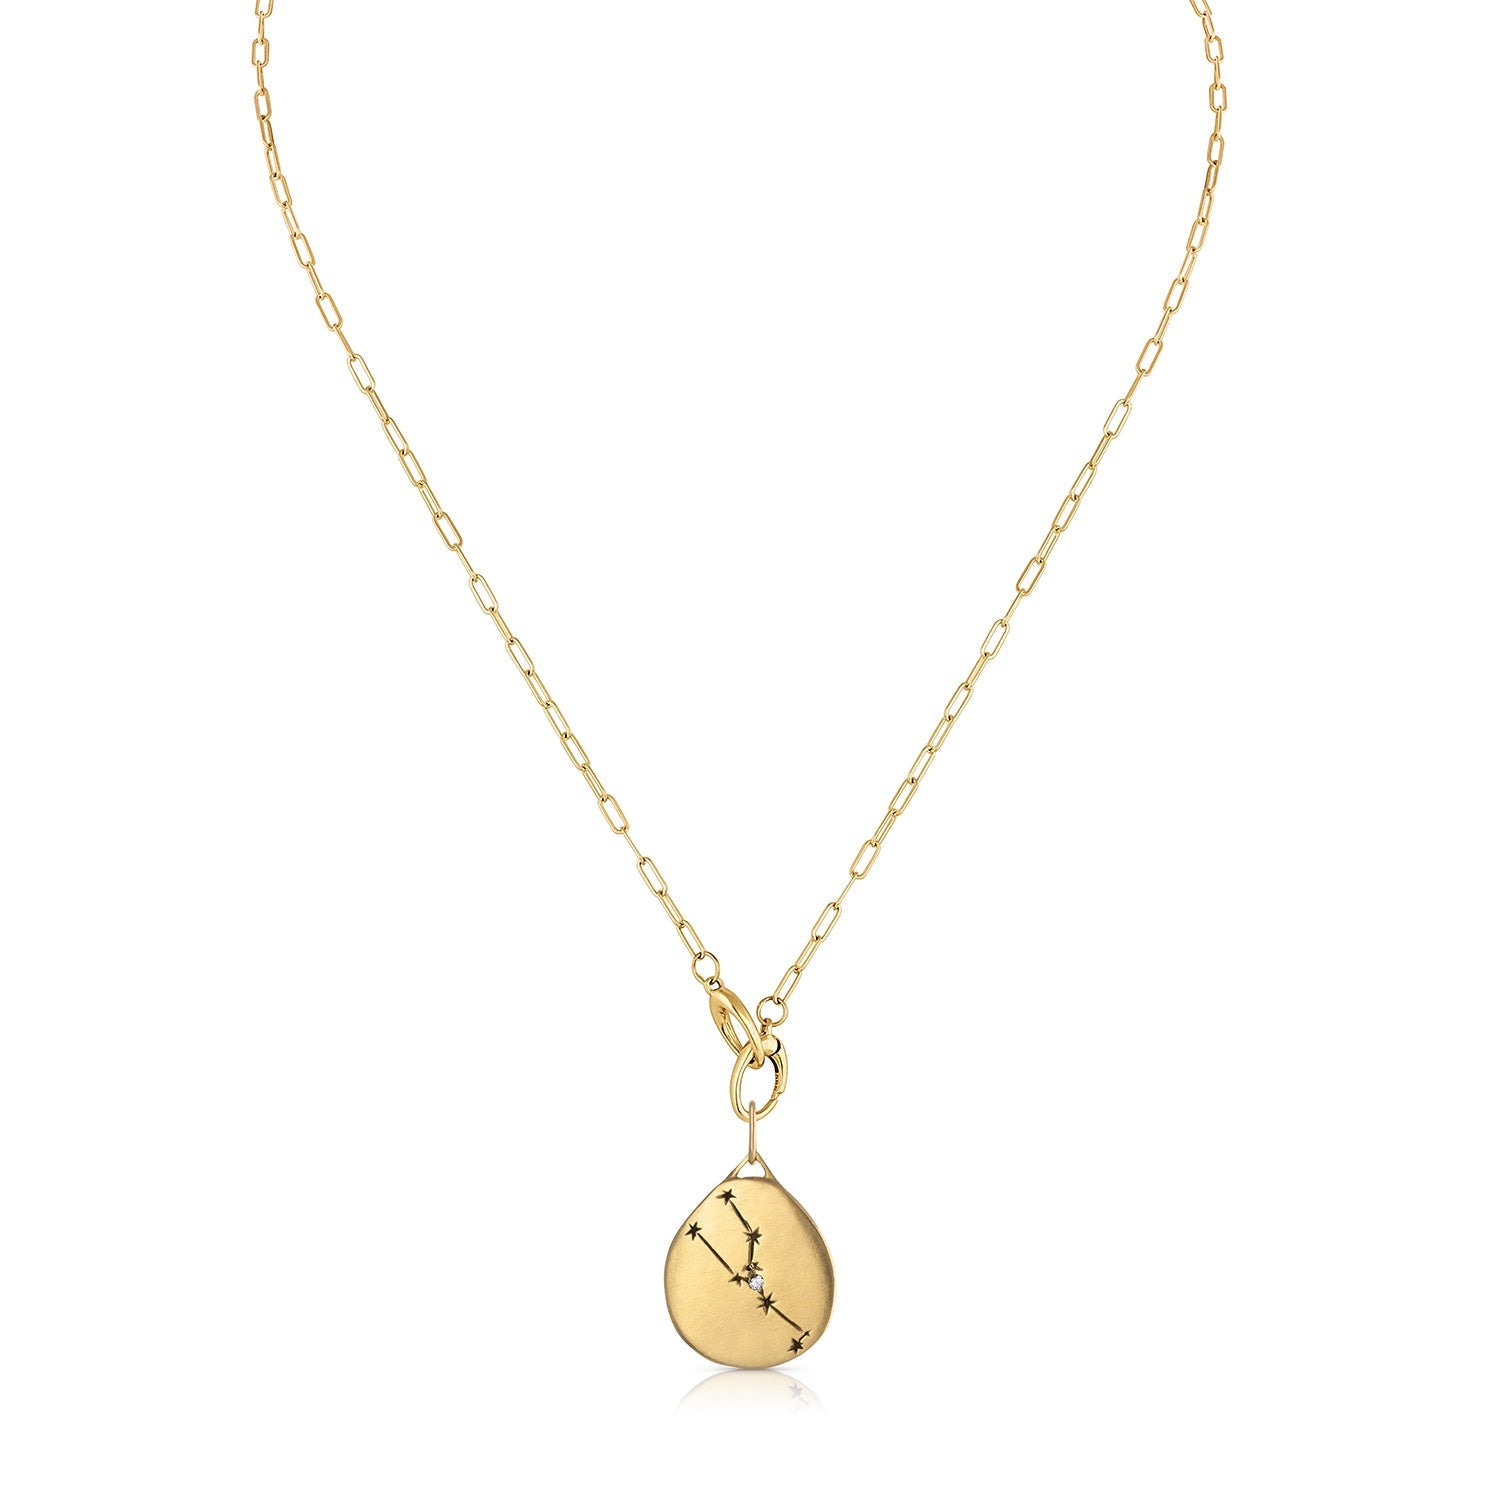 Taurus Aldebaran Necklace with Diamonds in 14k Gold - Shibumi Gallery